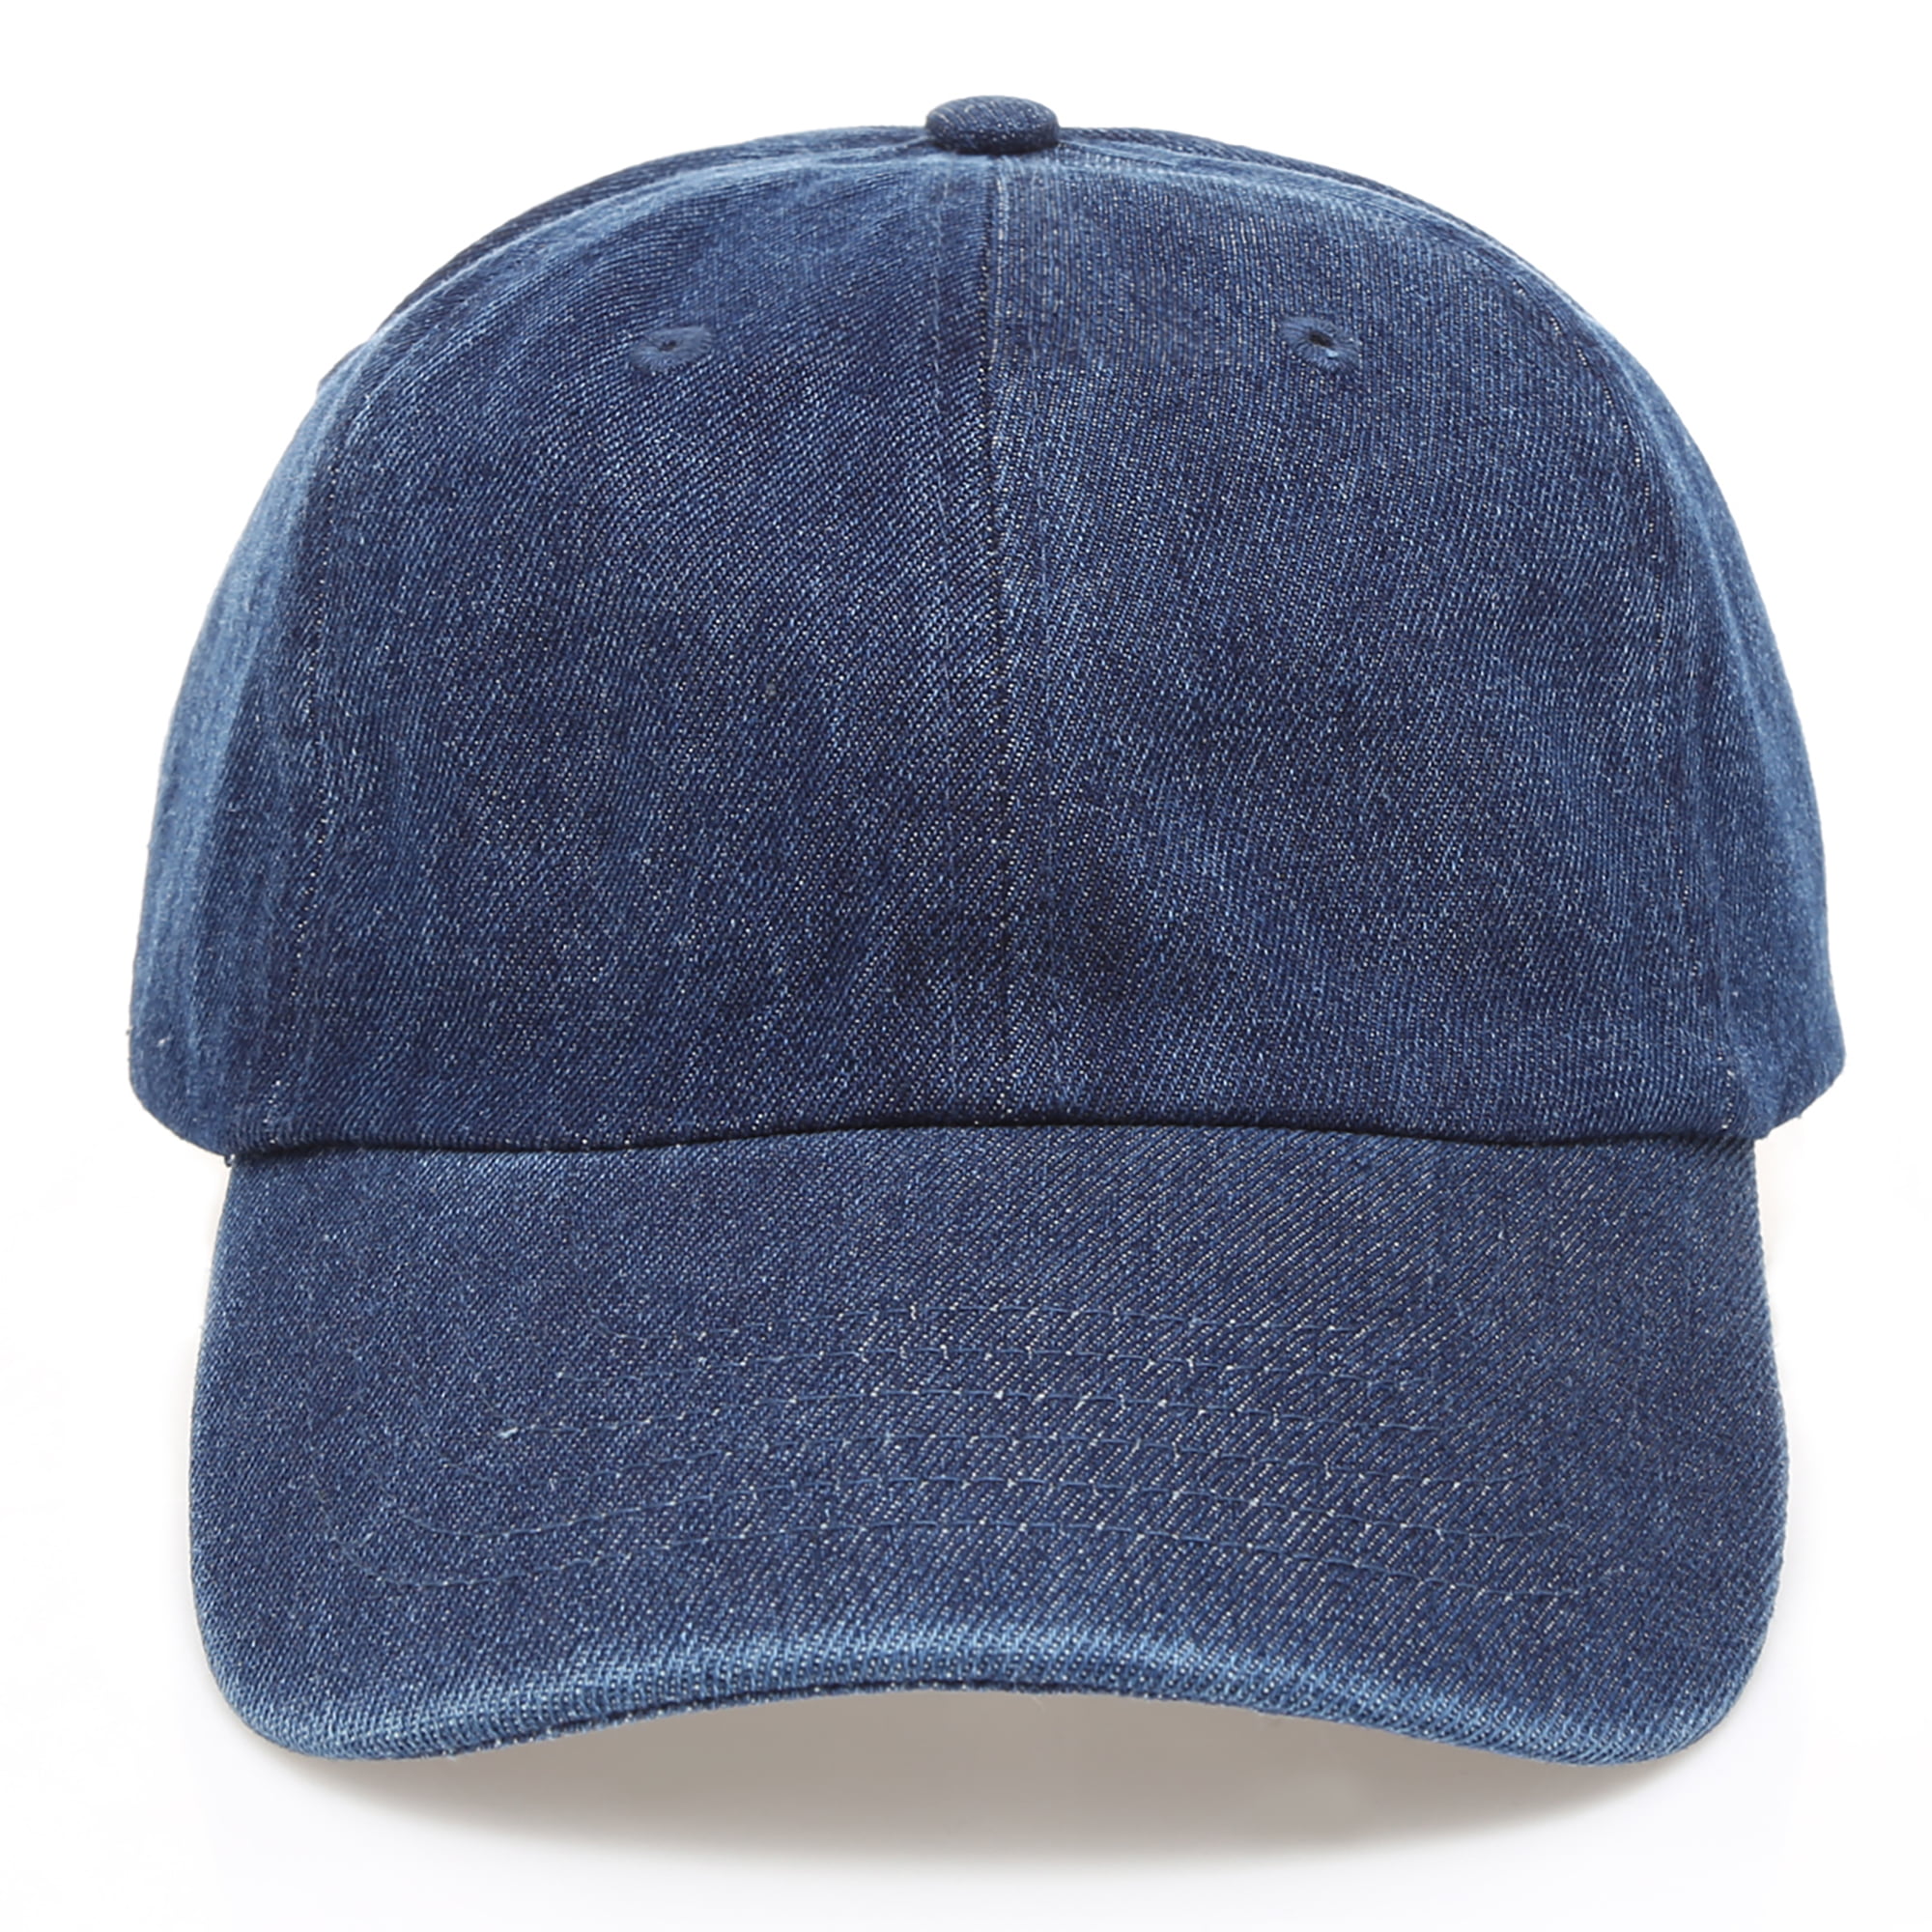 MIRMARU Casual 100% Cotton Denim Baseball Cap Hat with Adjustable Strap. 